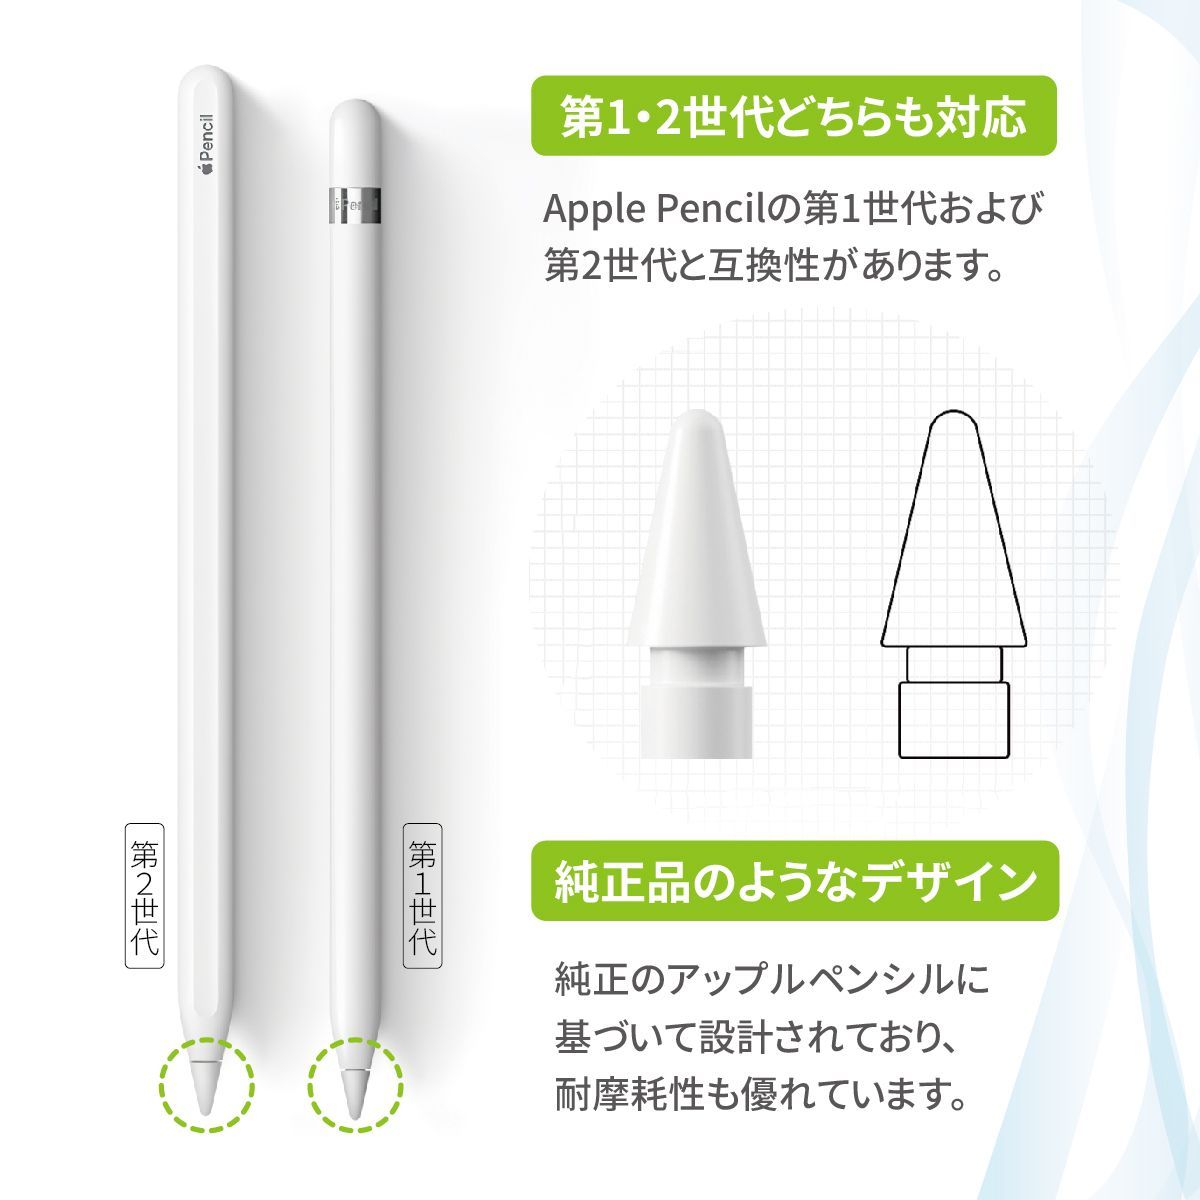 Apple Pencil tips ペン先 純正 アップルペンシル チップ 2つ - iPad